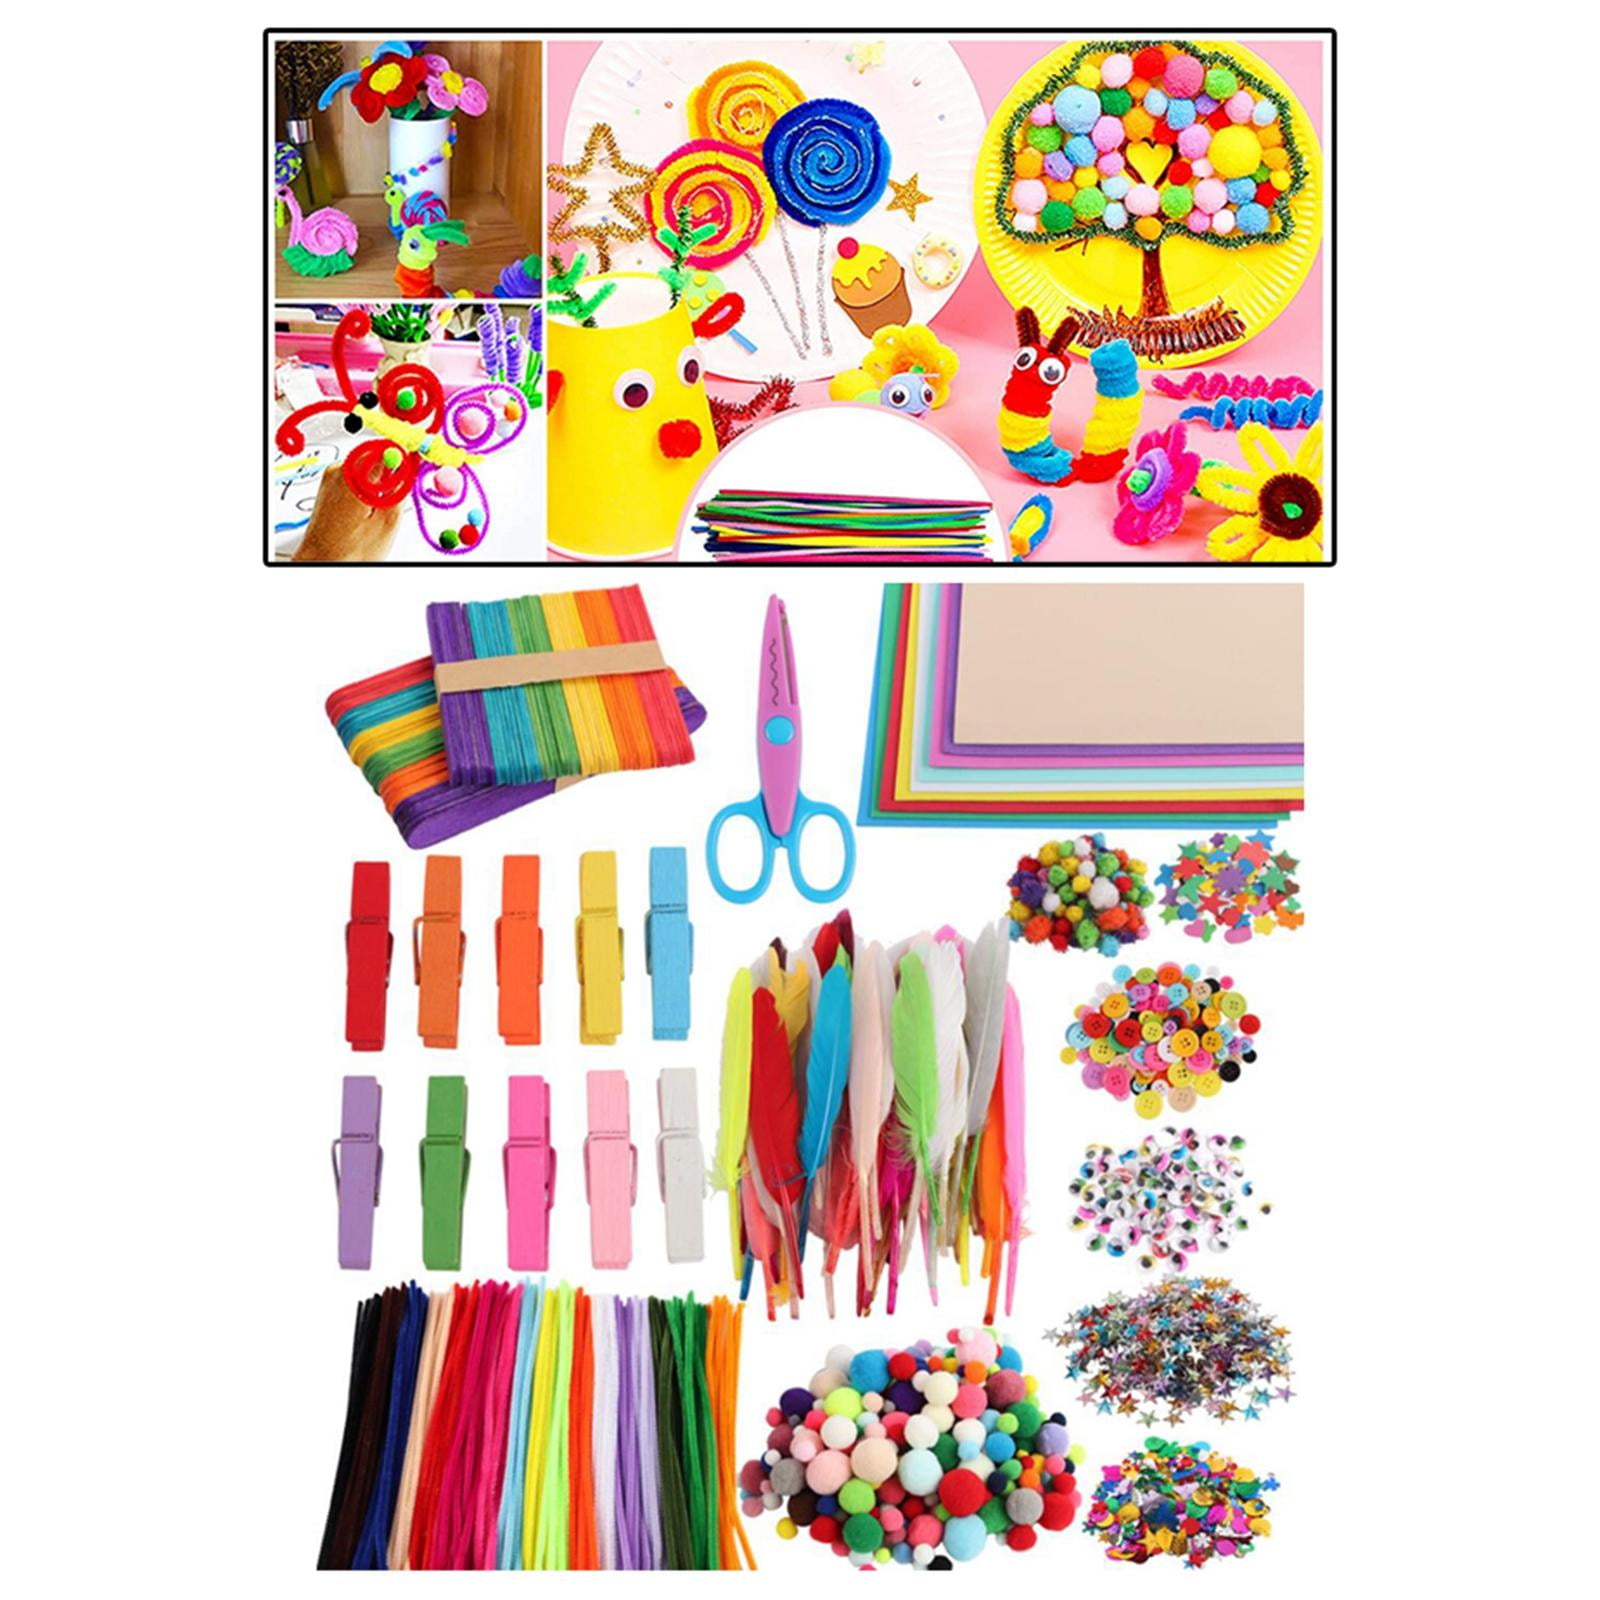 Zelssi [1200+] Pcs Craft Kit - Arts and Crafts for Kids - Mega Craft Vault  for Craft Supplies - Fantastic Craft Kits for Kids Ages 4-12, Learning  Activities & DIY Gift Idea